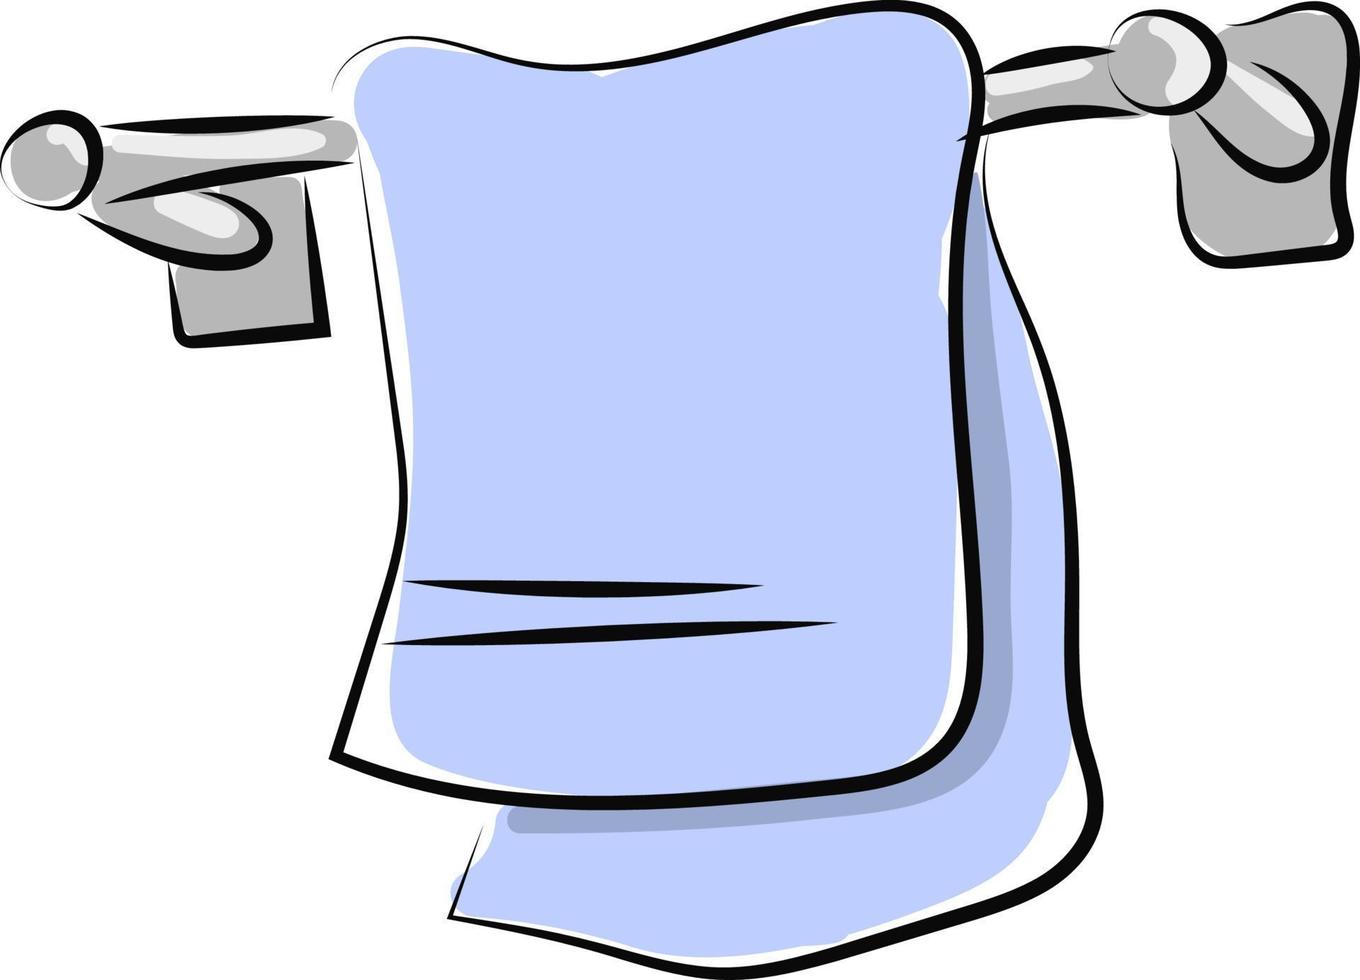 blå handduk i badrum, illustration, vektor på vit bakgrund.